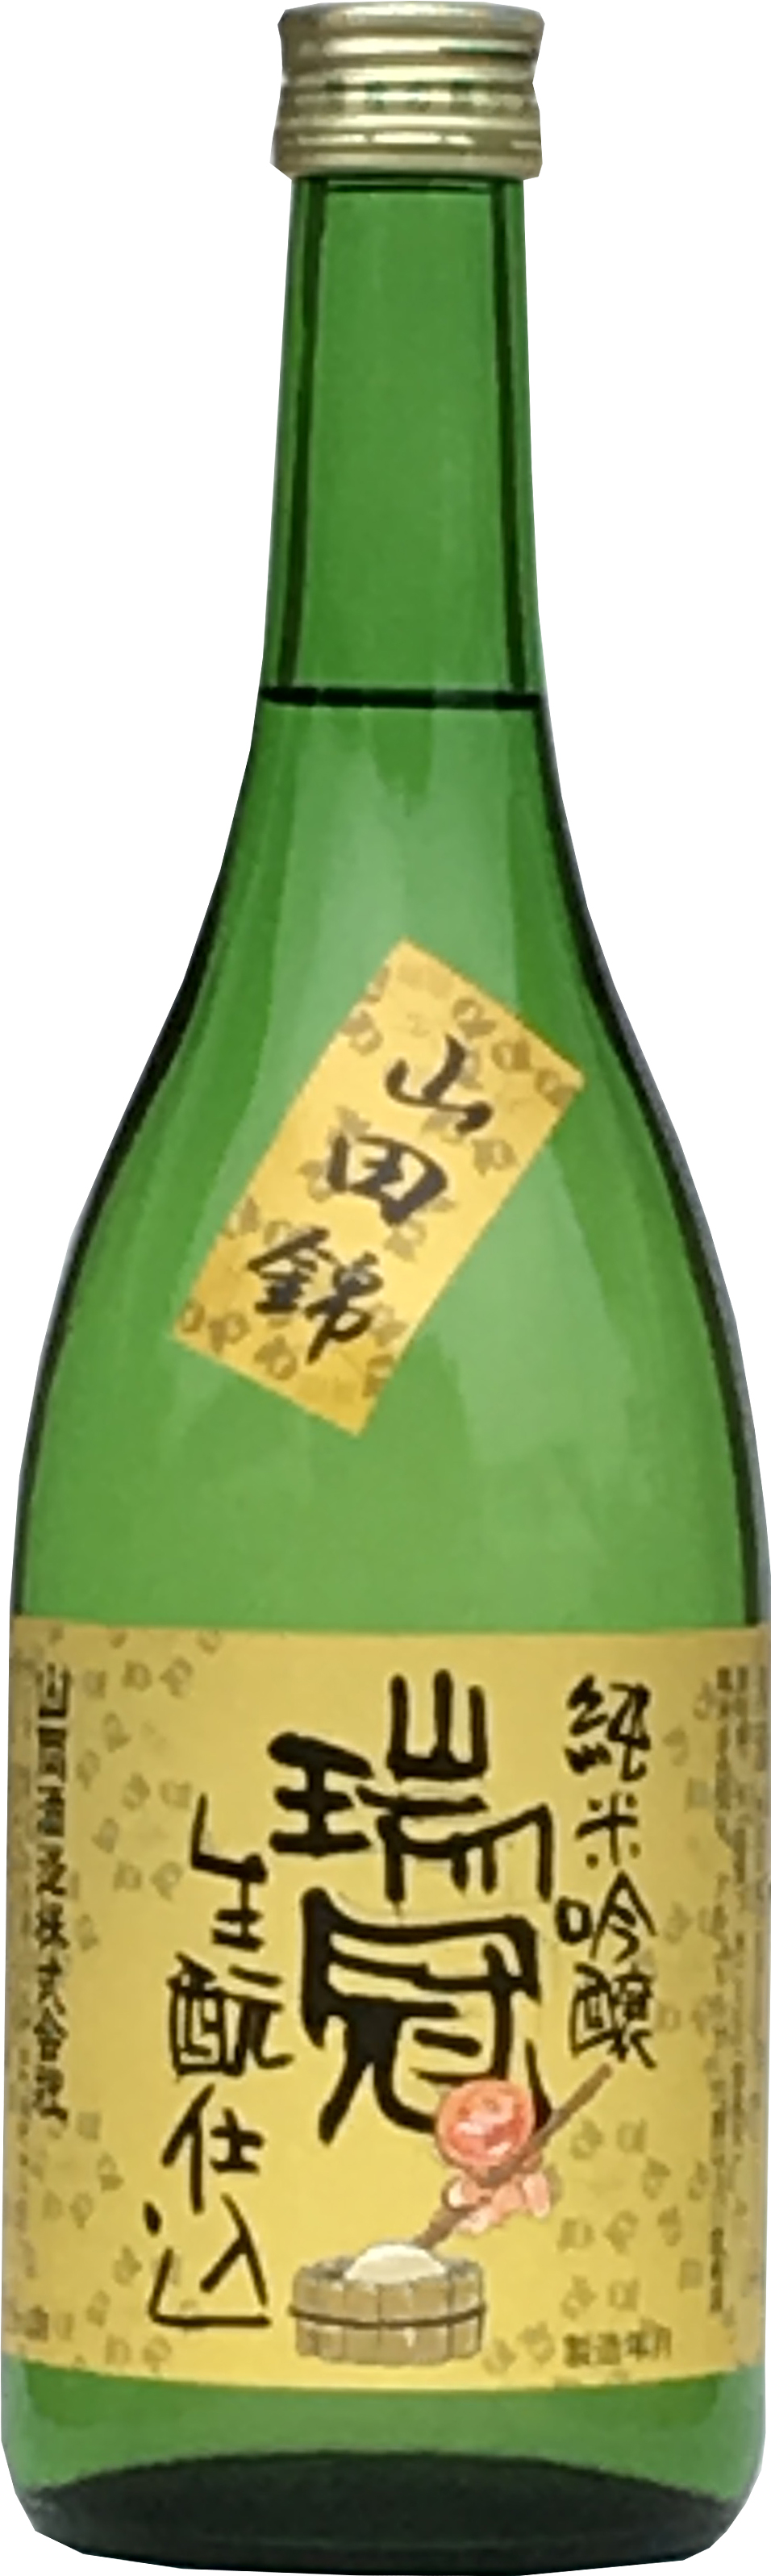 370 - Saké Zuikan Junmai Ginjo -720 ml